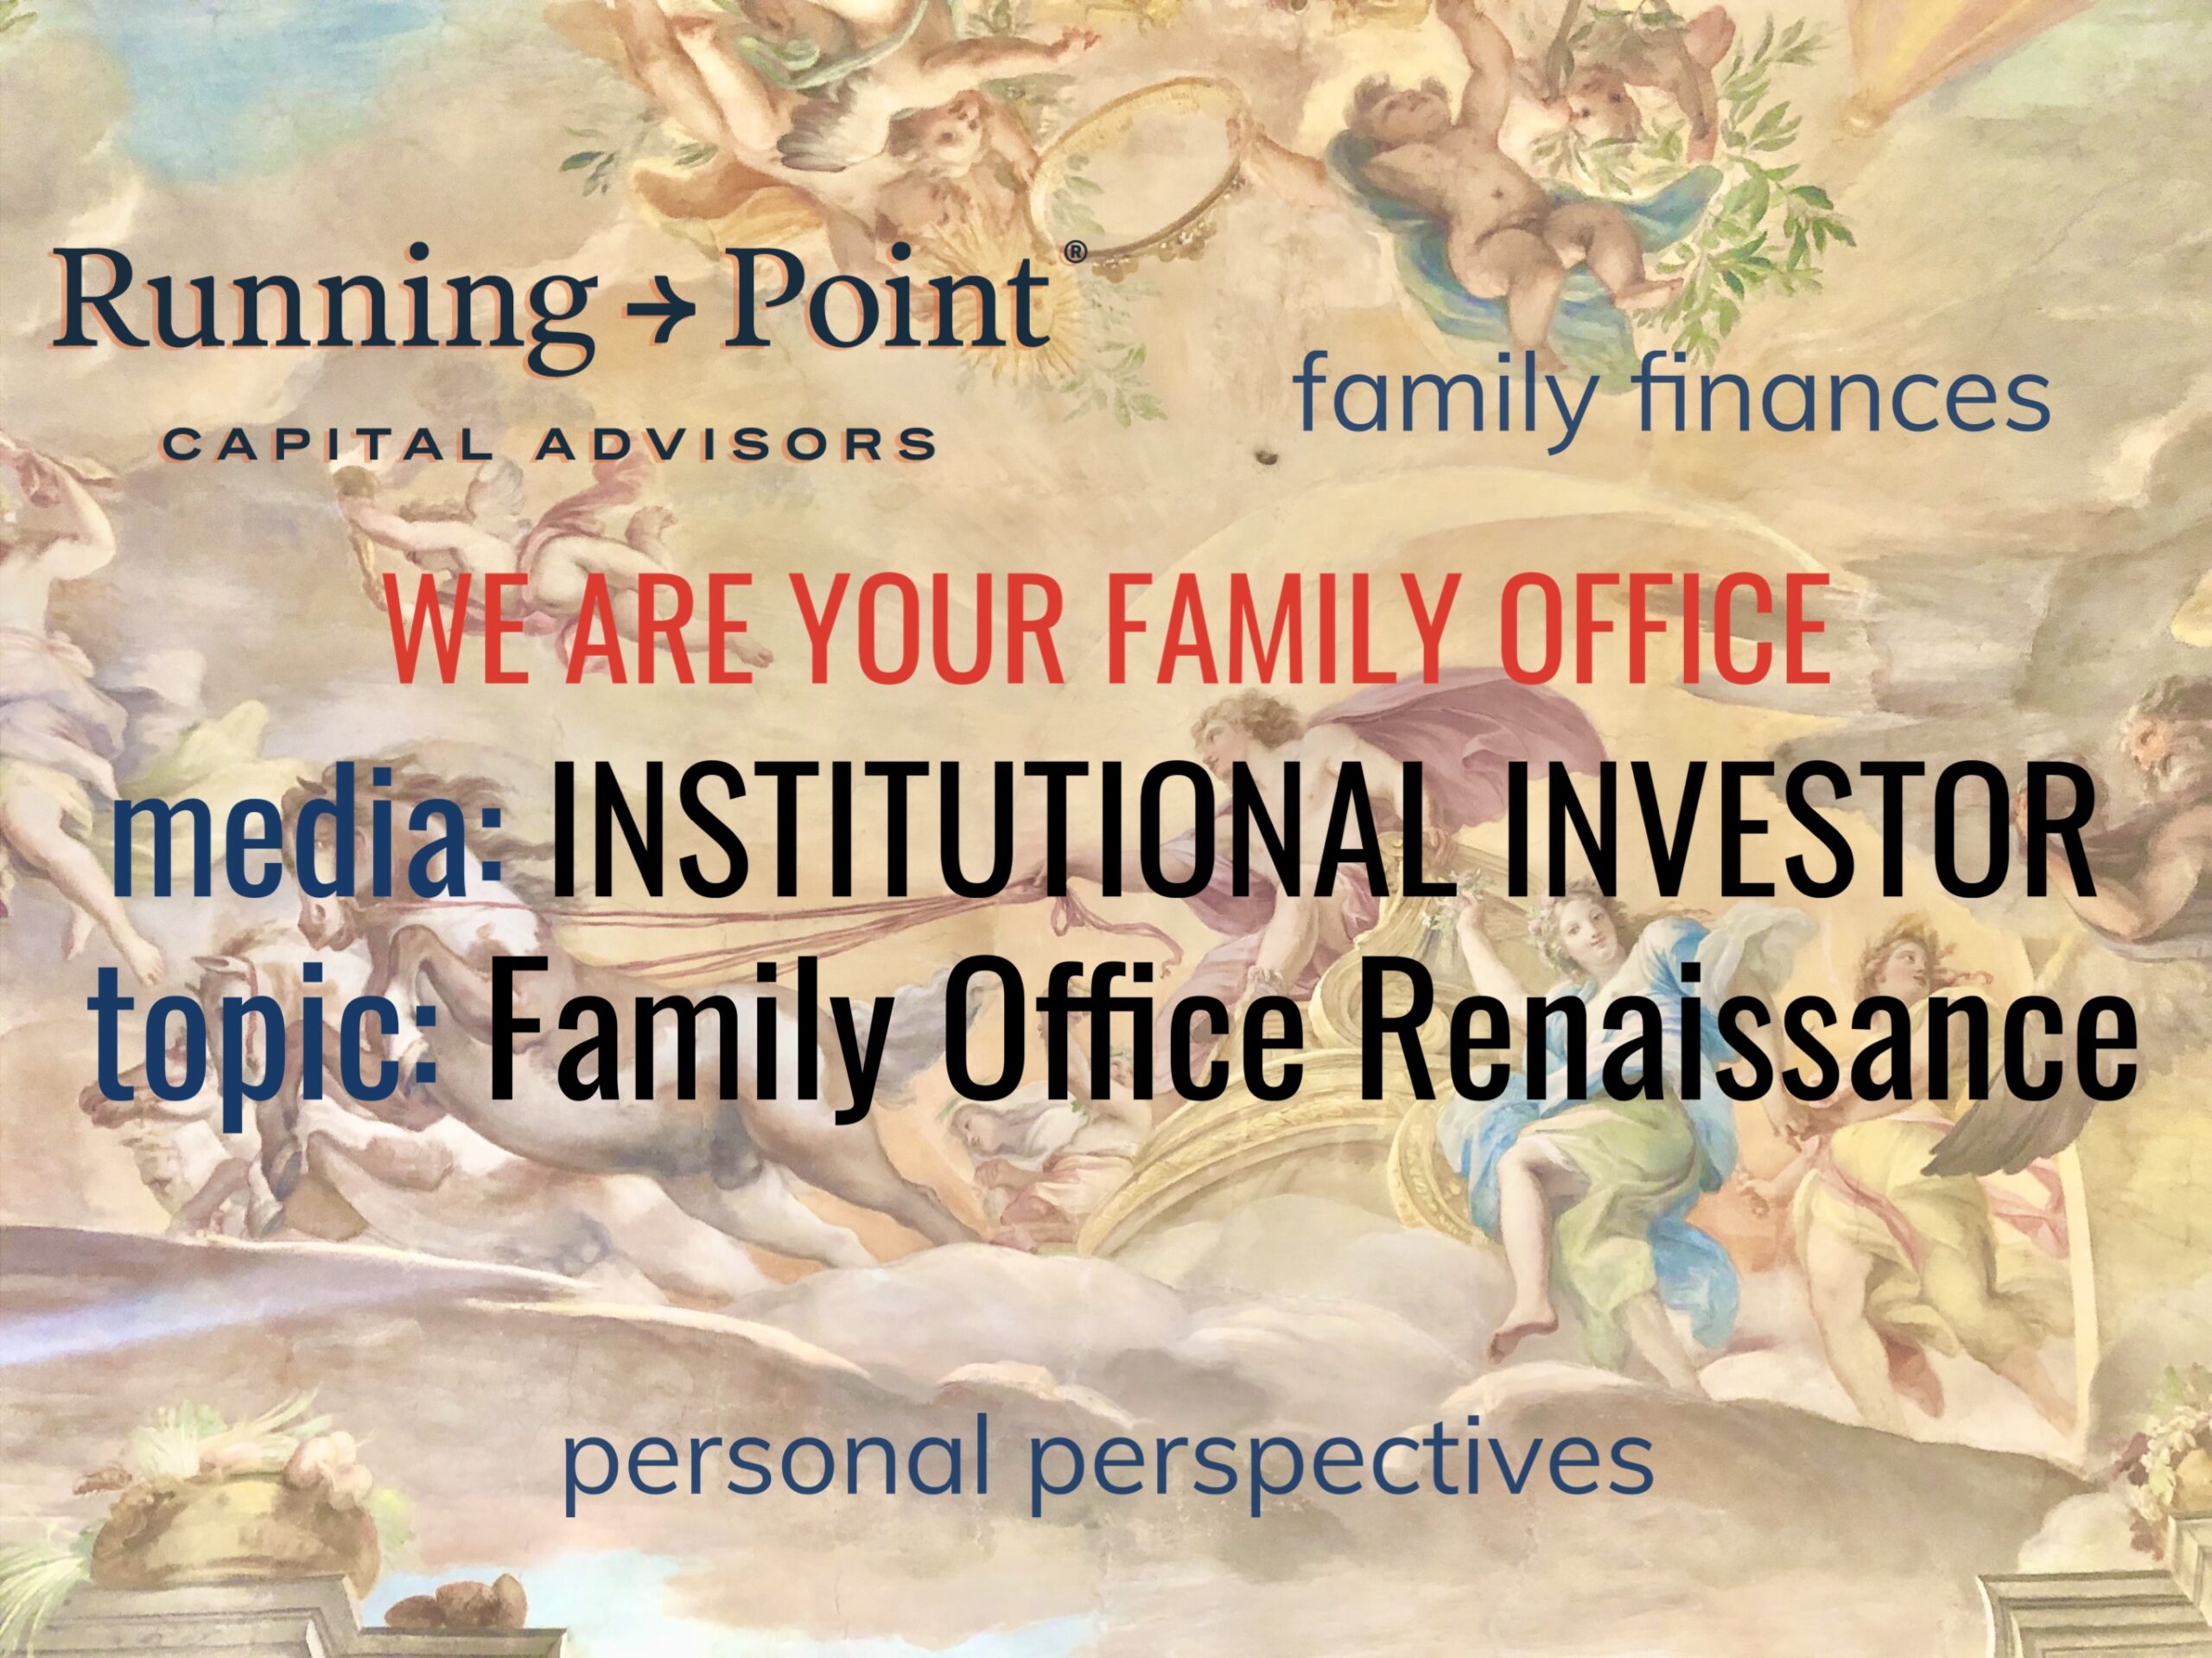 family office Renaissance